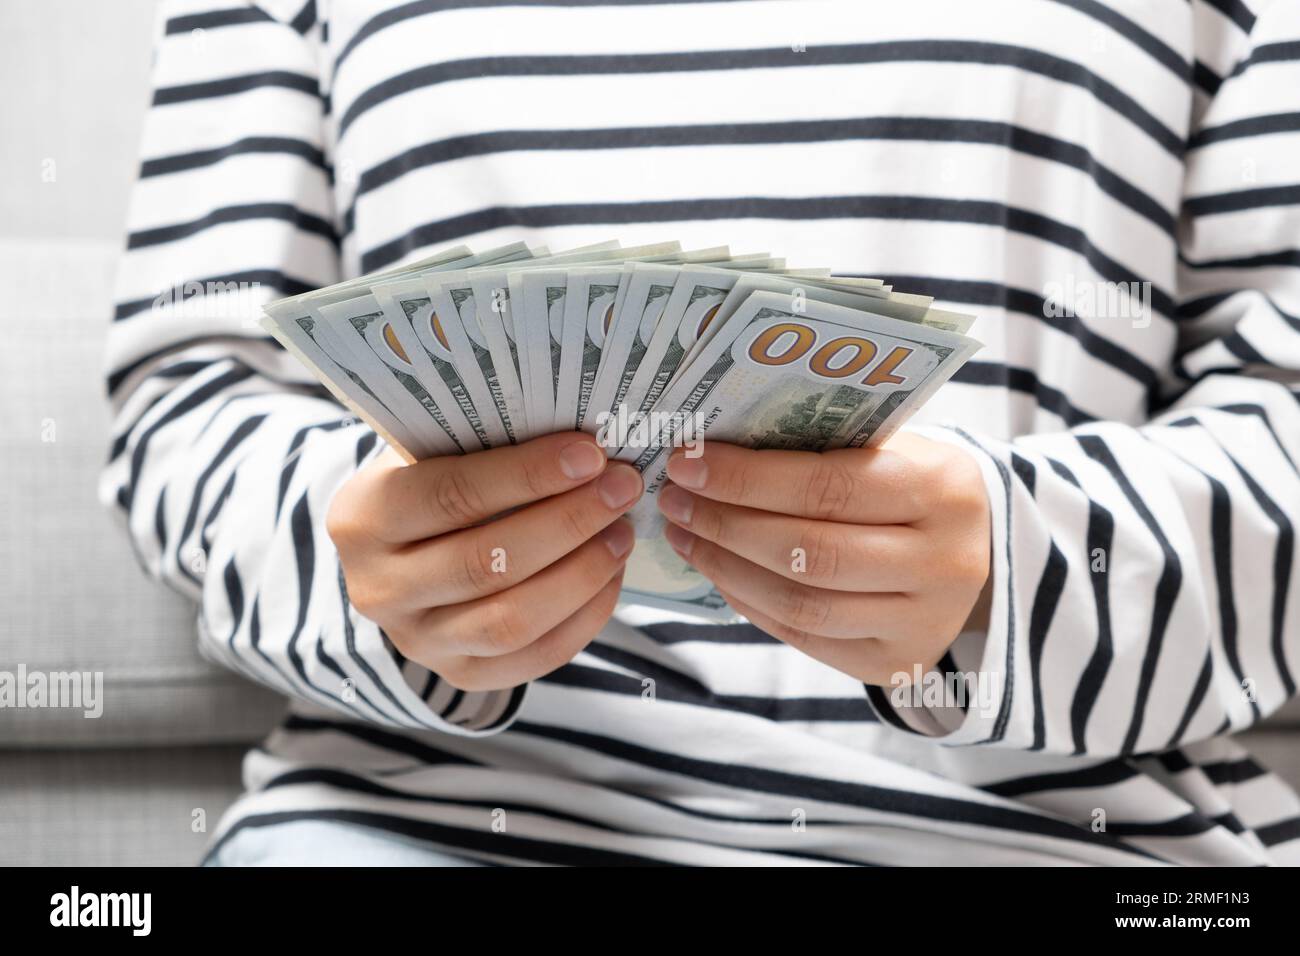 A woman counts hundred-dollar bills, hands close-up. Stock Photo